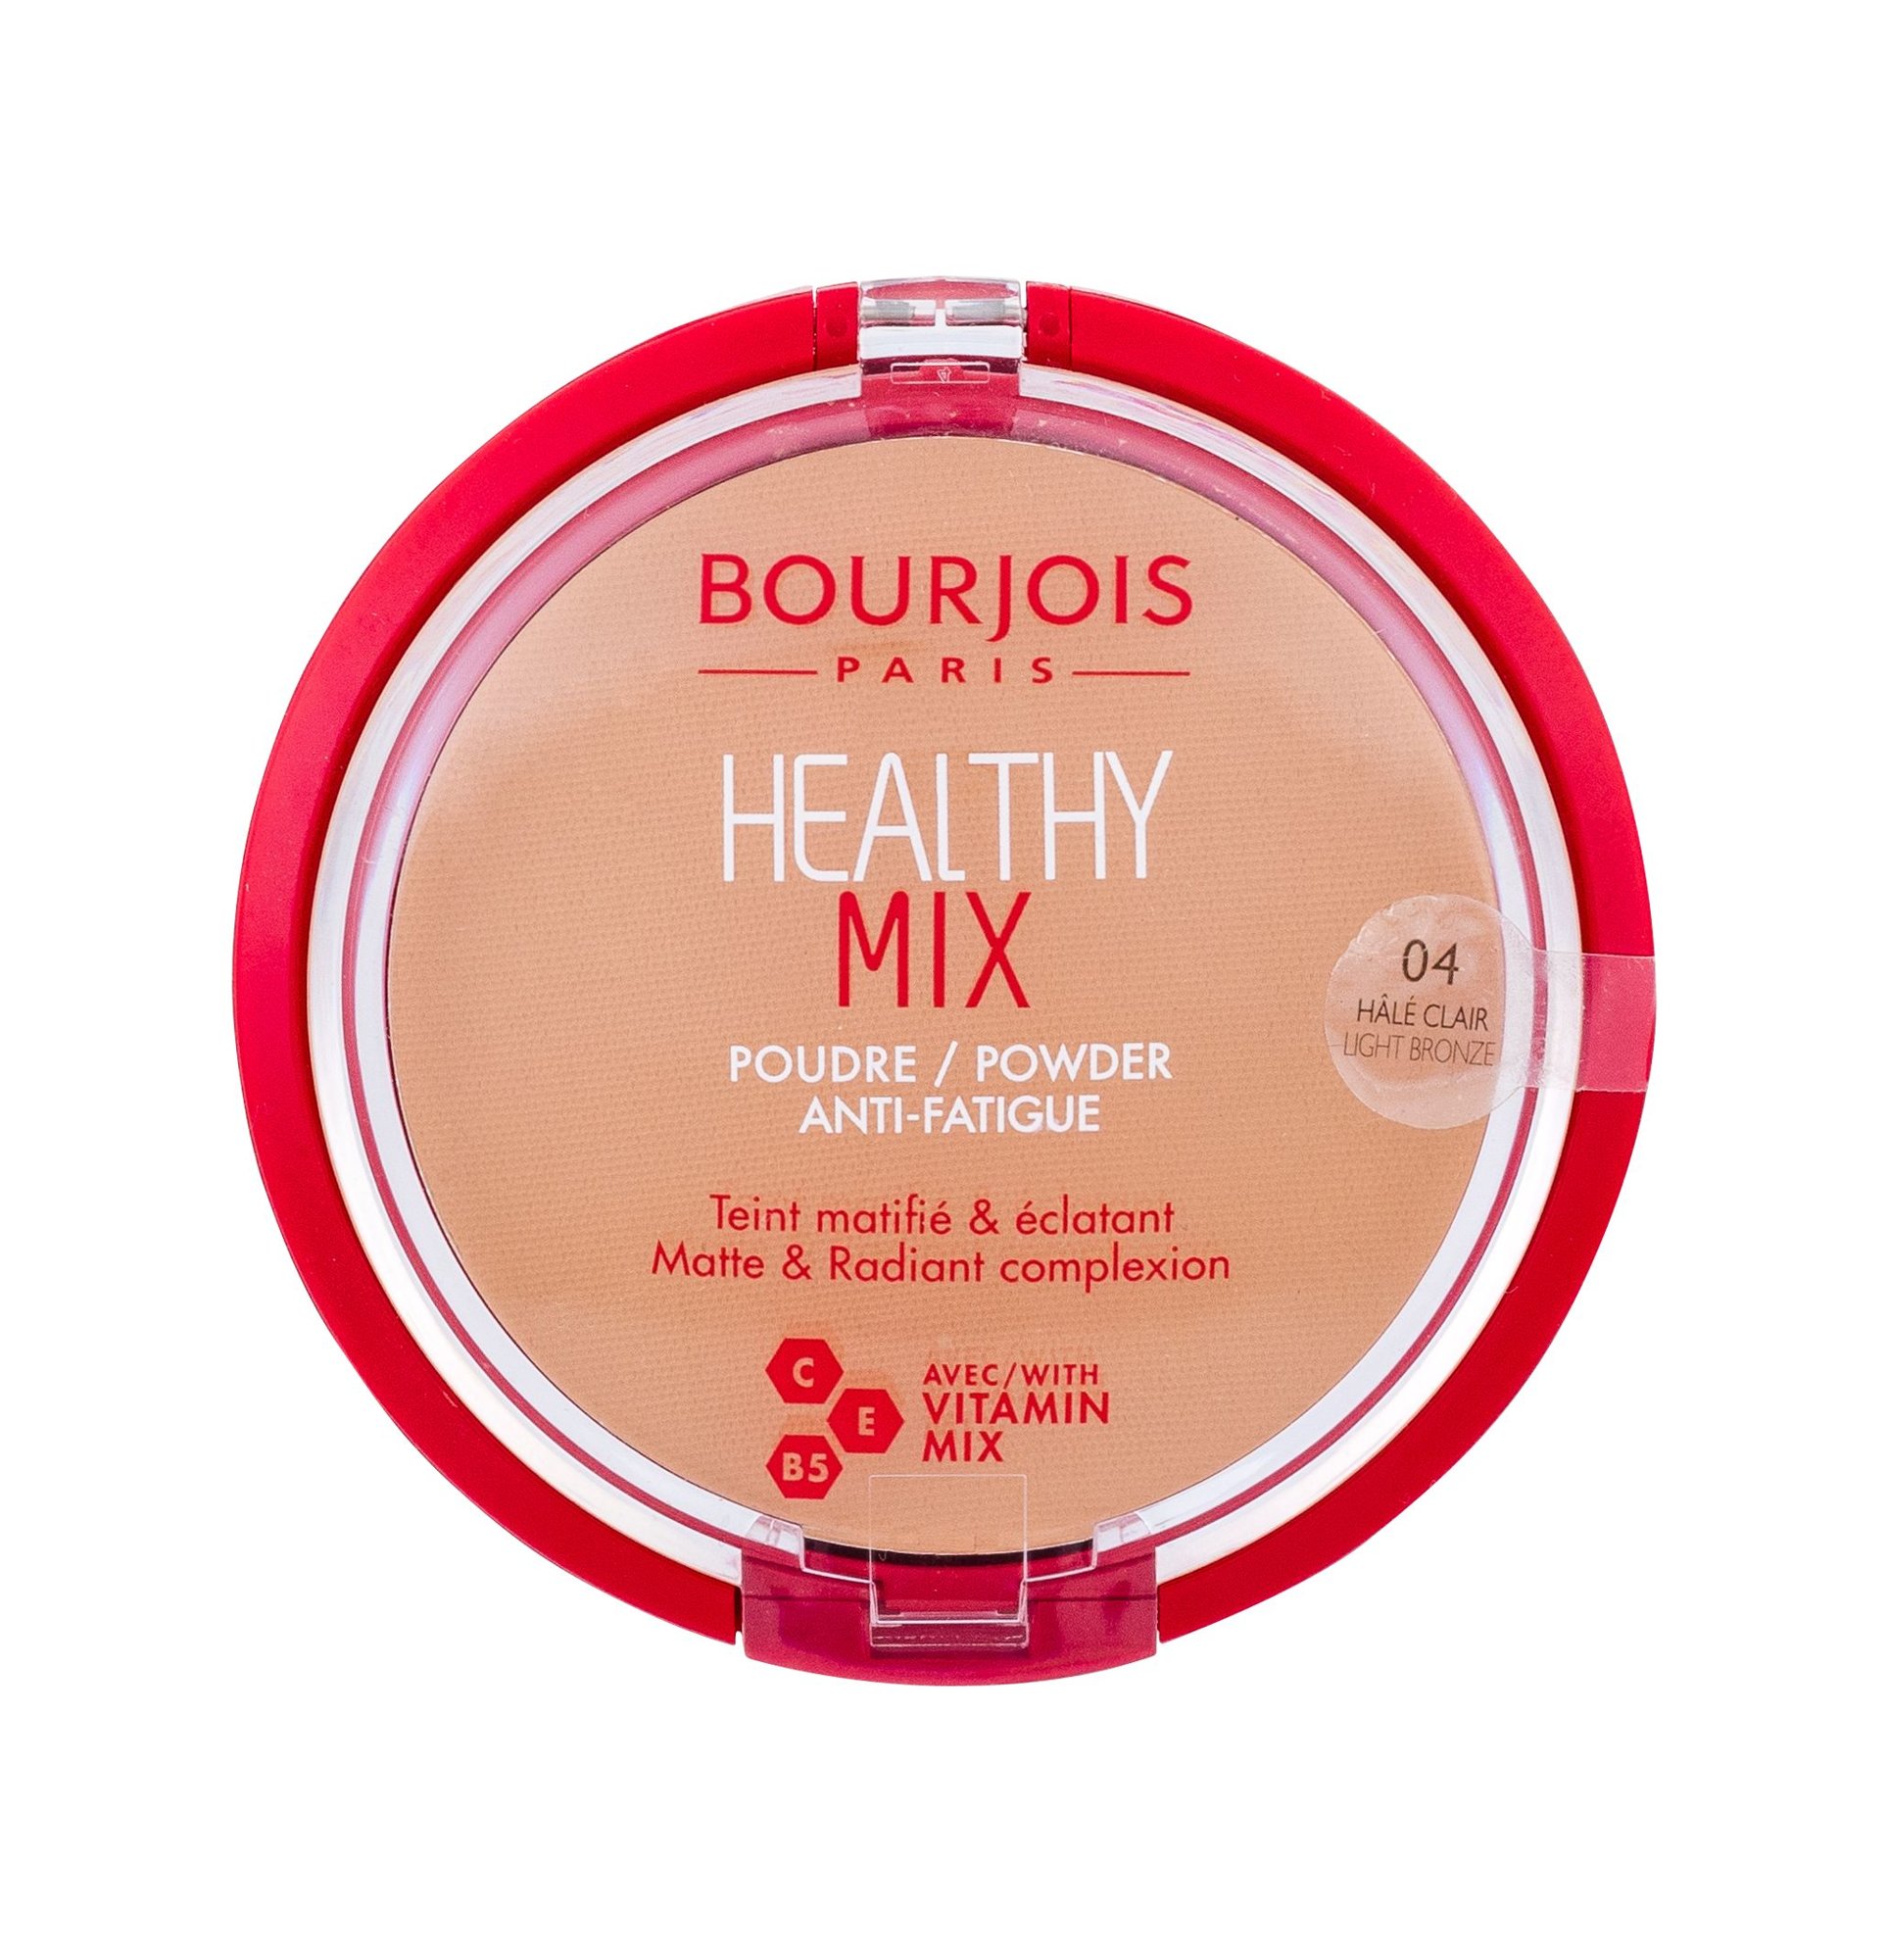 BOURJOIS Paris Healthy Mix Anti-Fatigue sausa pudra